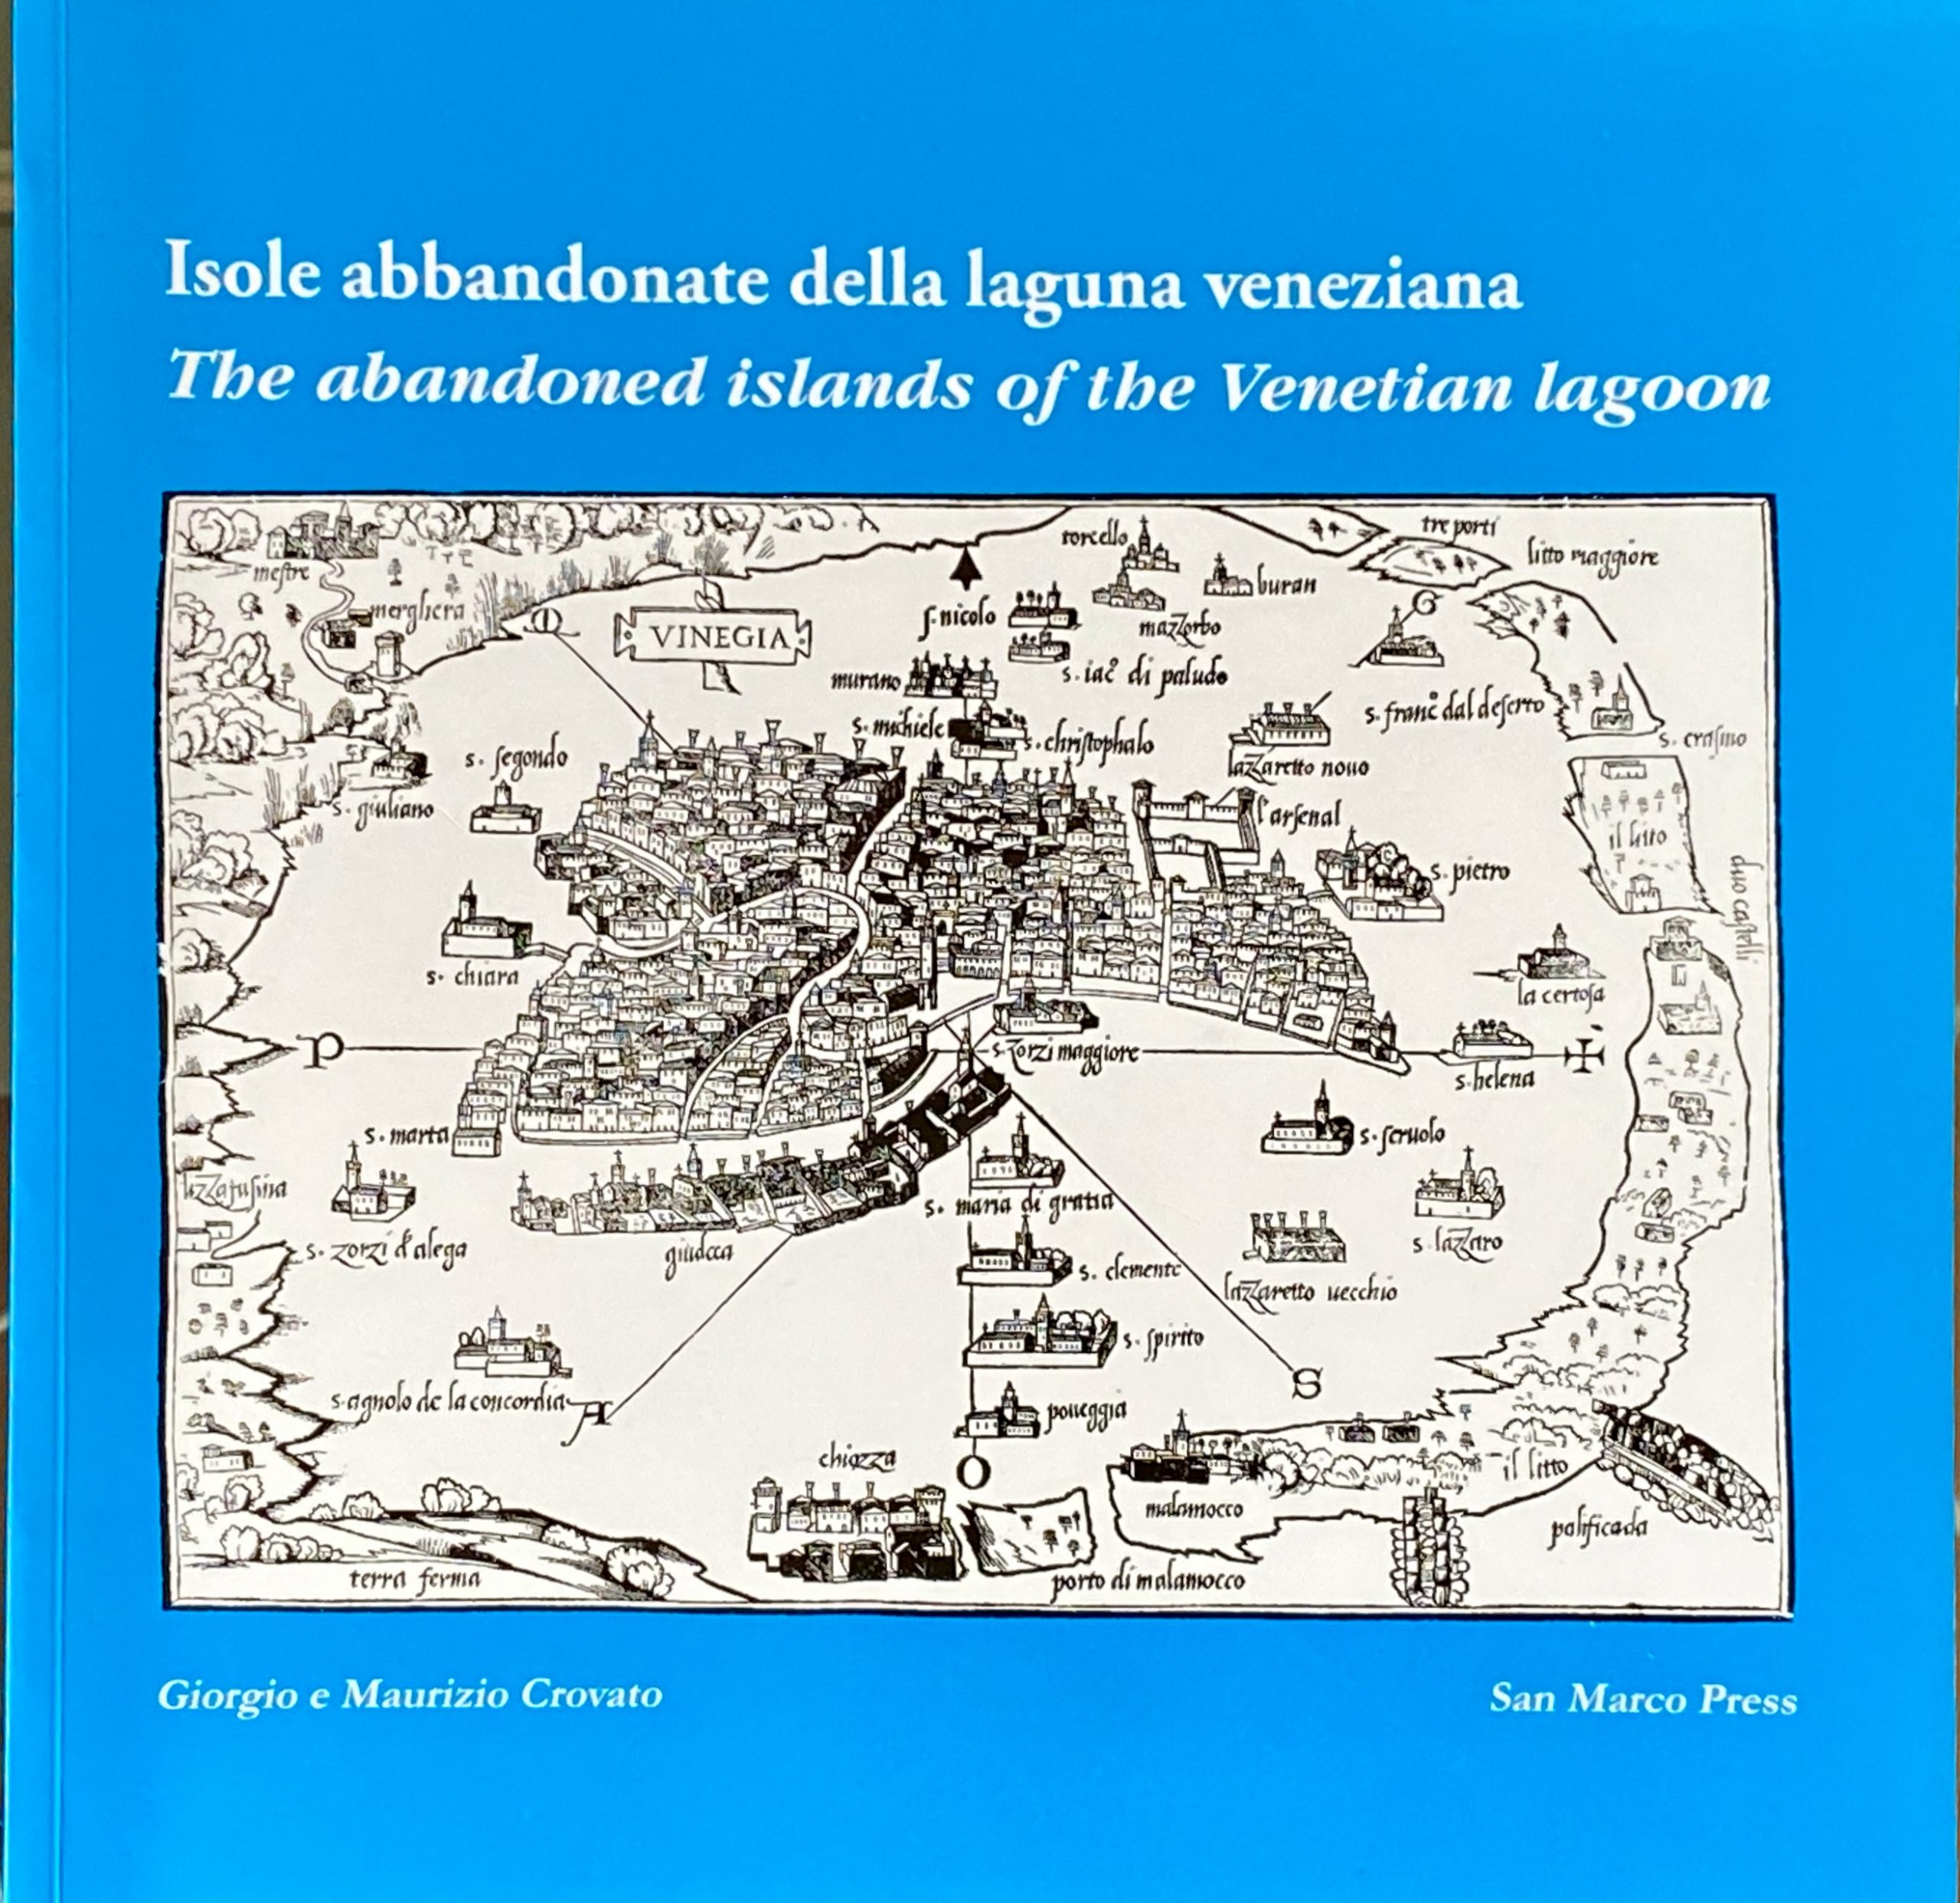 Cover - Abandoned Islands of the Venetian Lagoon